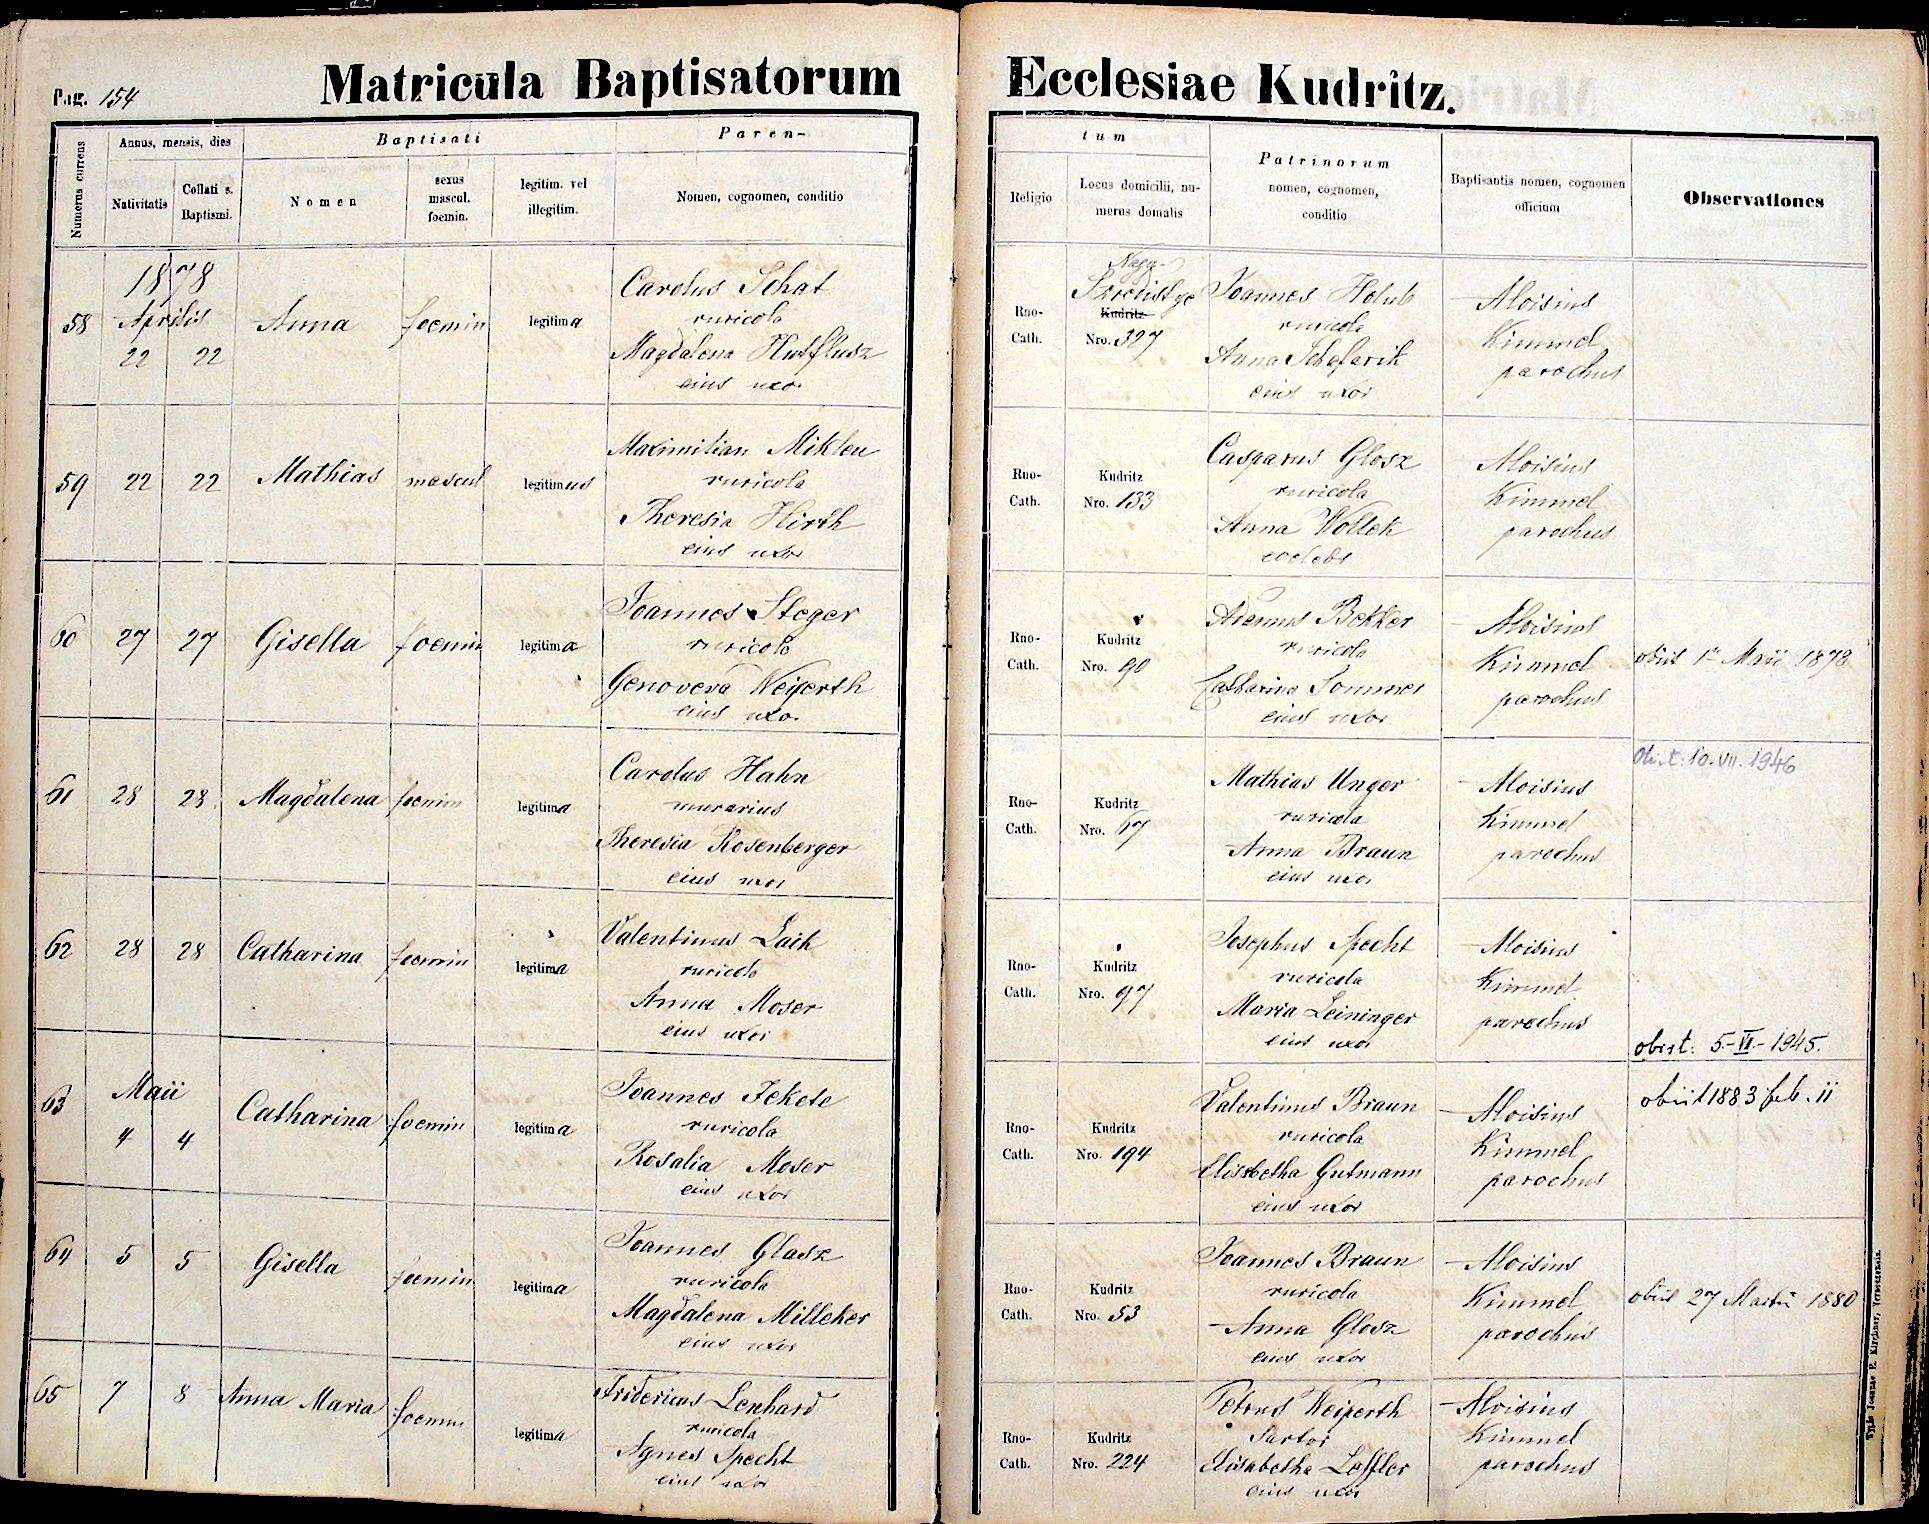 images/church_records/BIRTHS/1870-1879B/1878/154